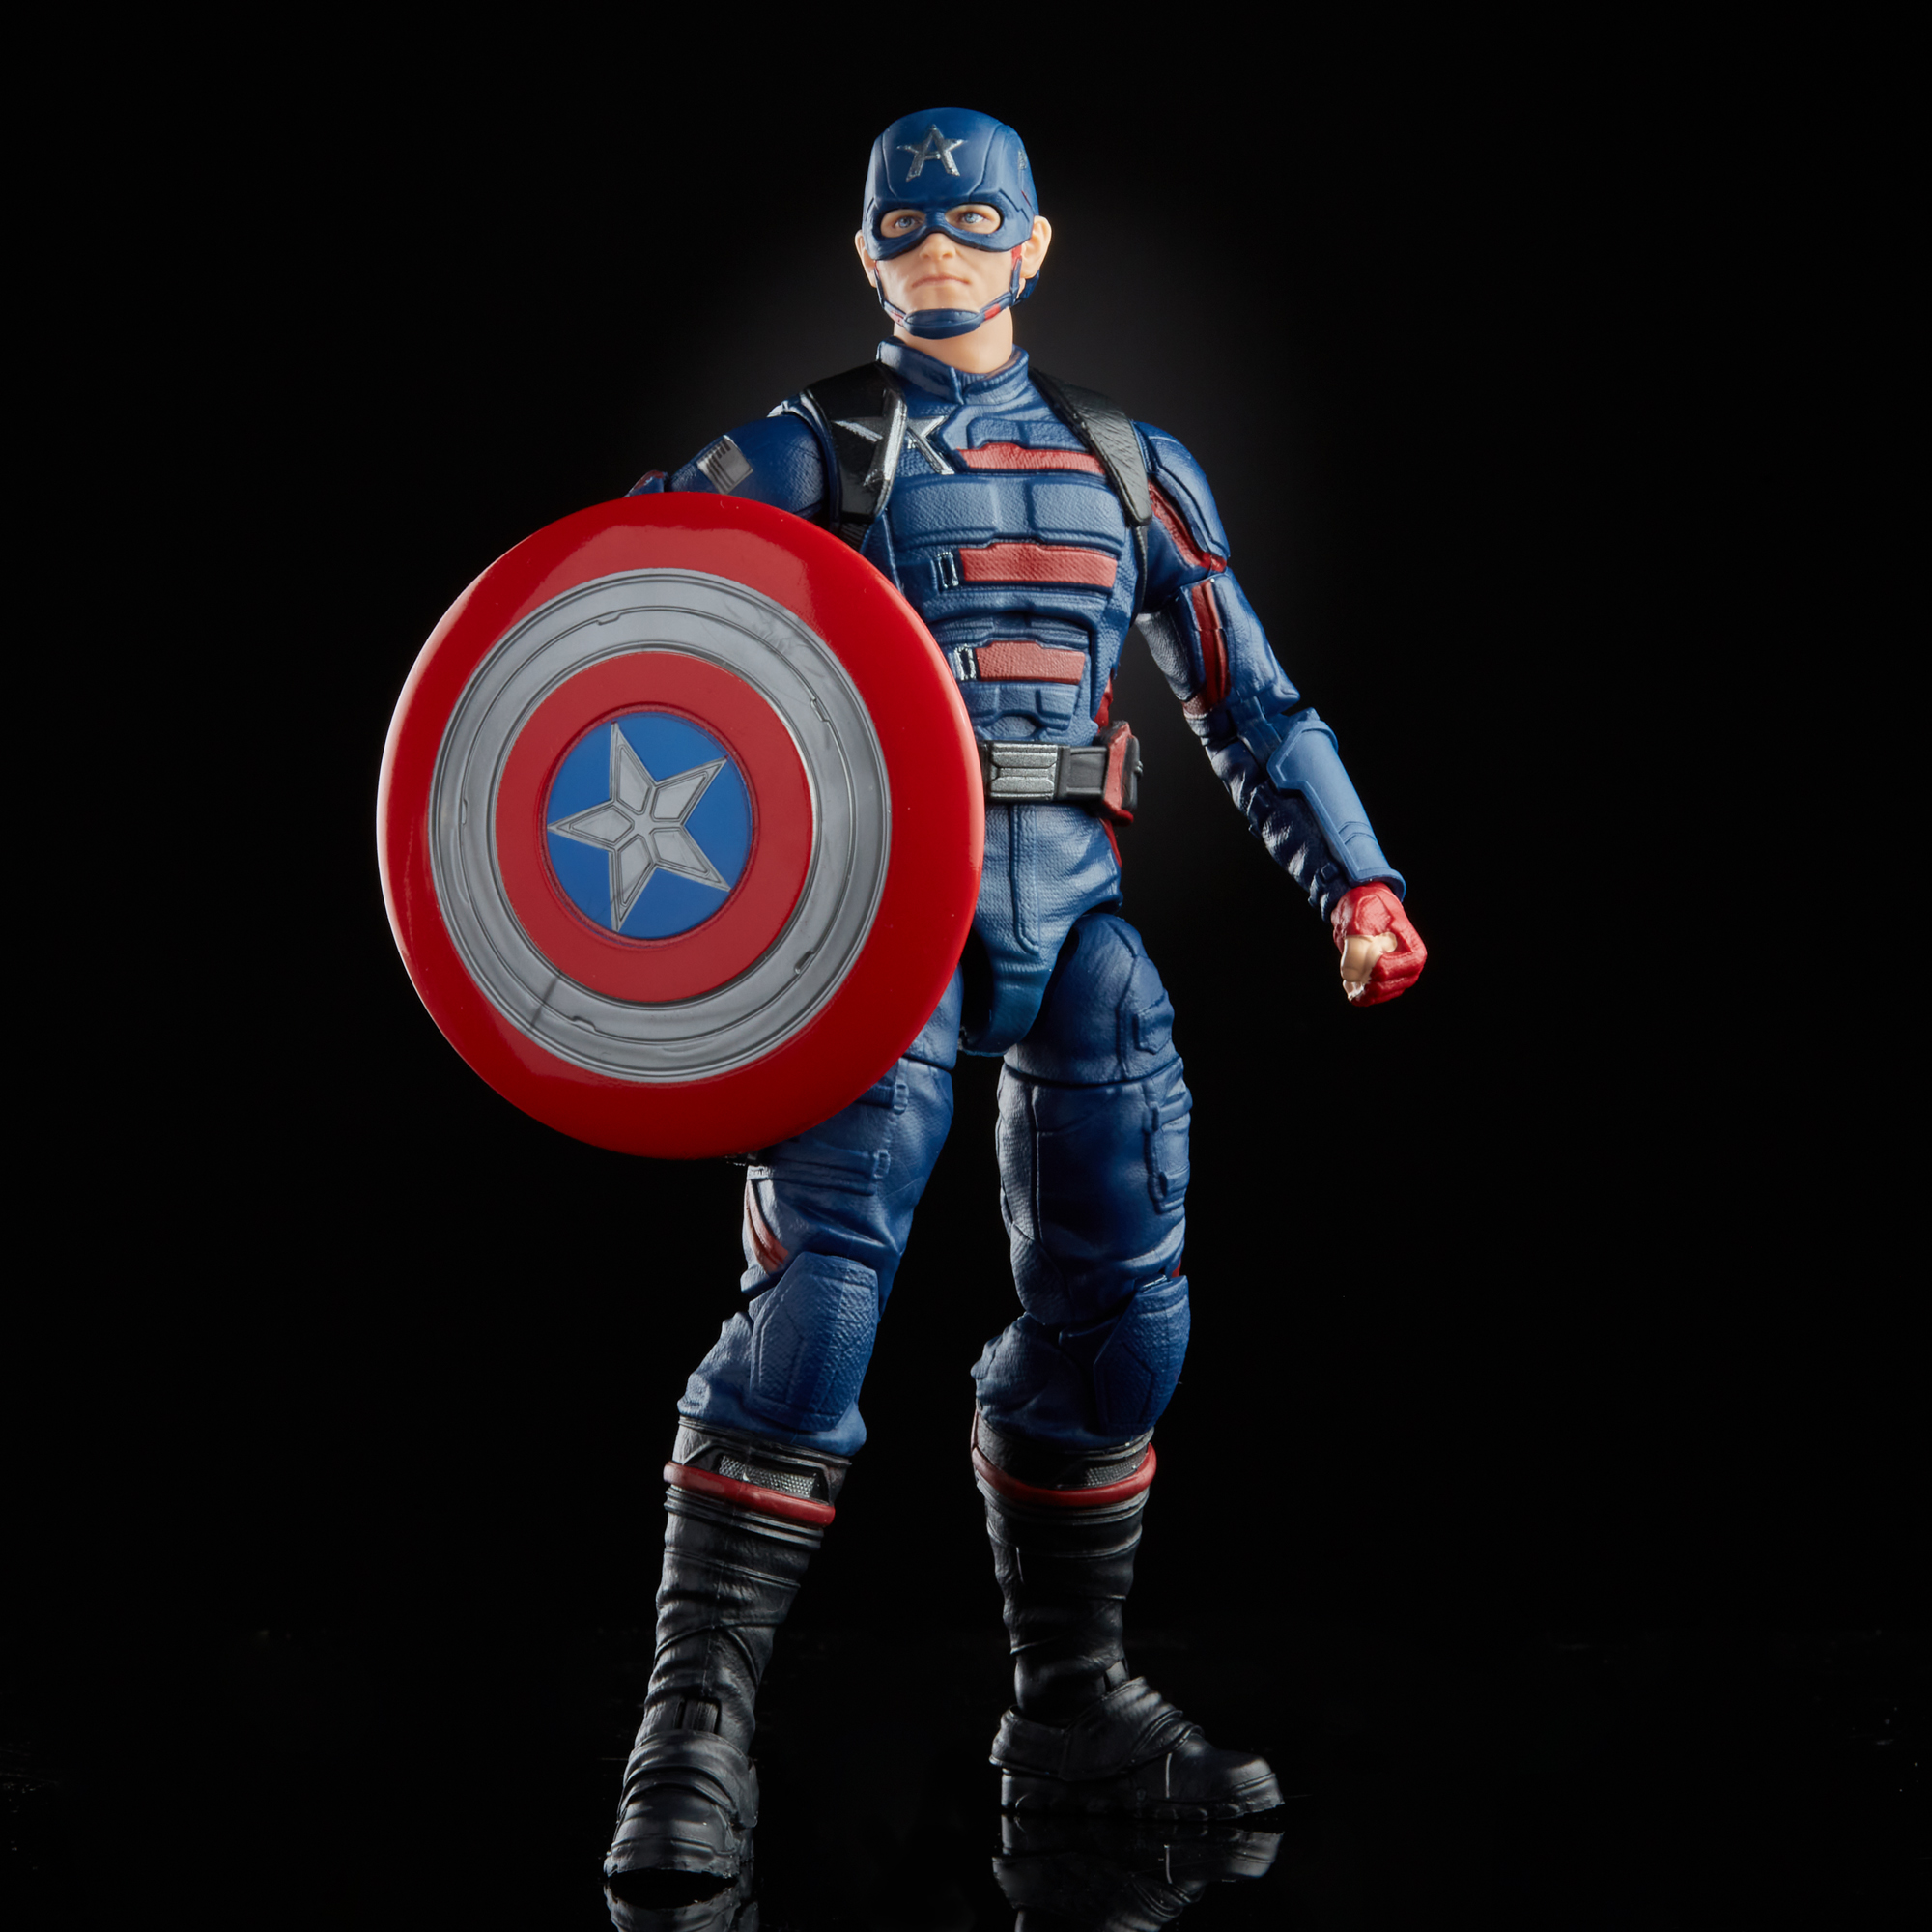 Marvel Legends Series Captain America: John F. Walker F02245L0 5010993860753